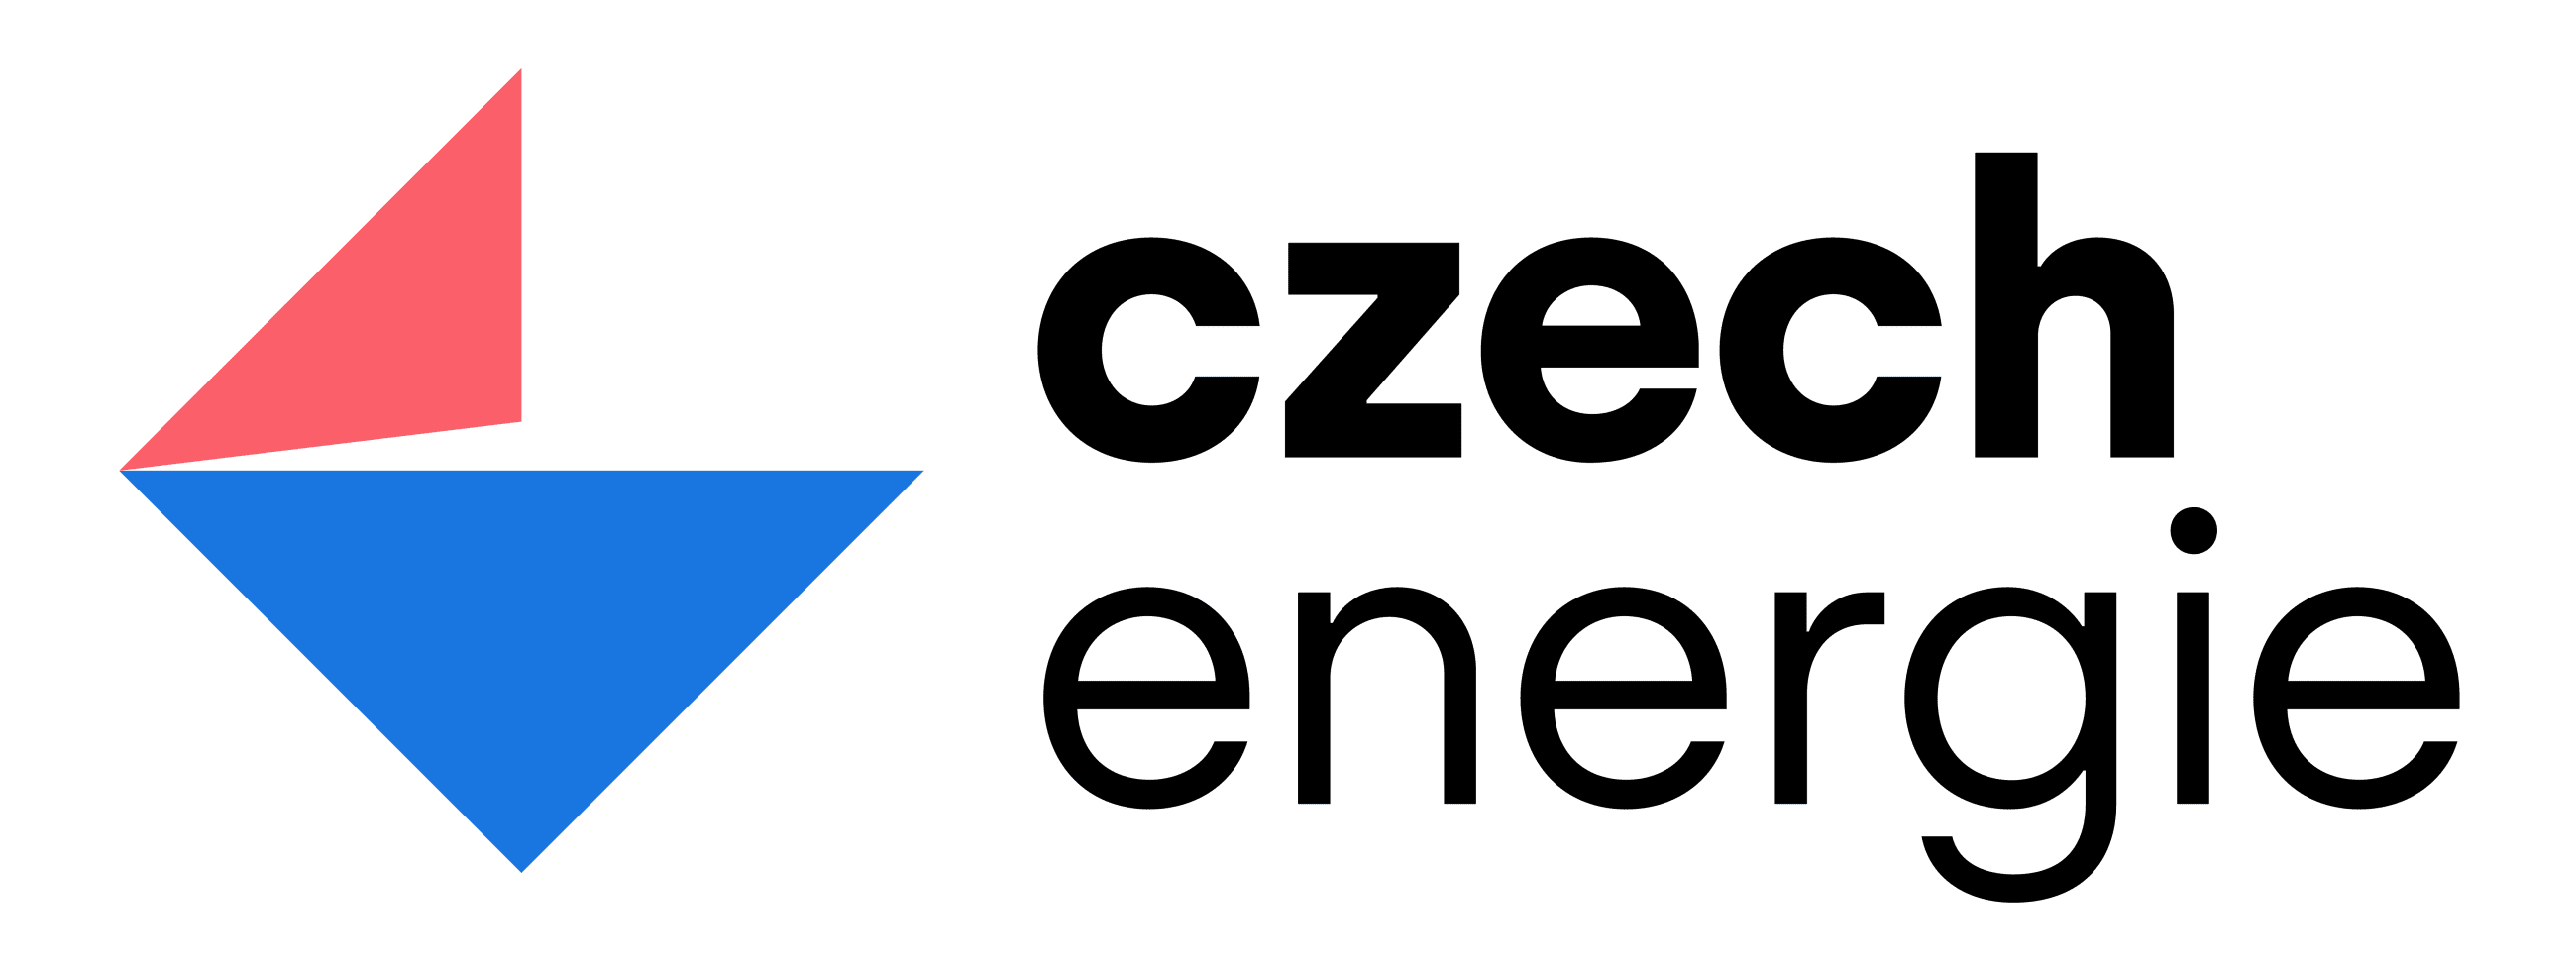 Czechenergie